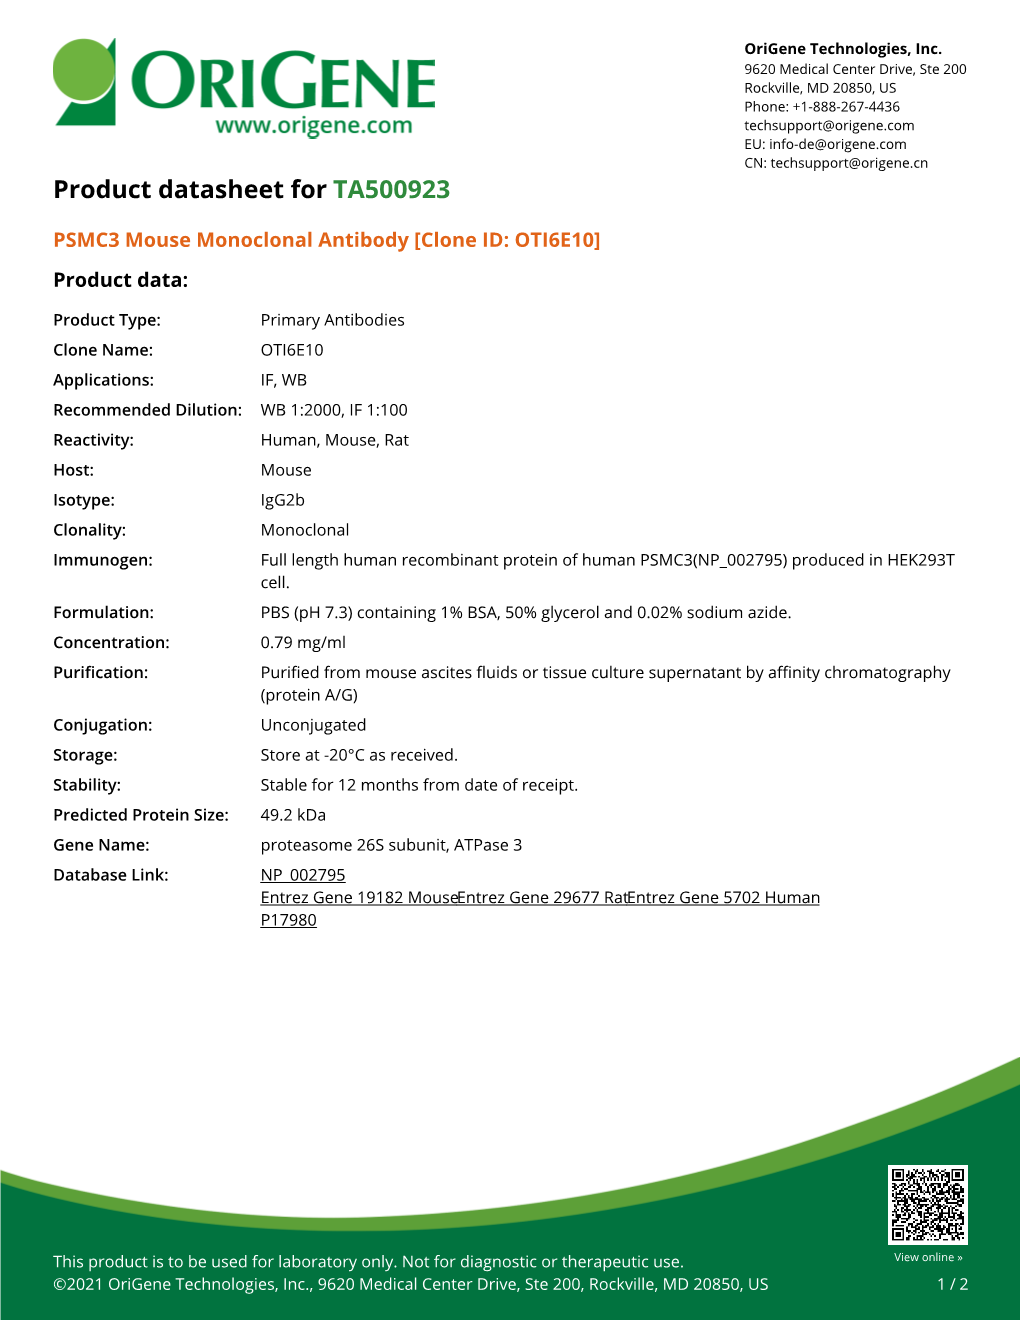 PSMC3 Mouse Monoclonal Antibody [Clone ID: OTI6E10] – TA500923 | Origene